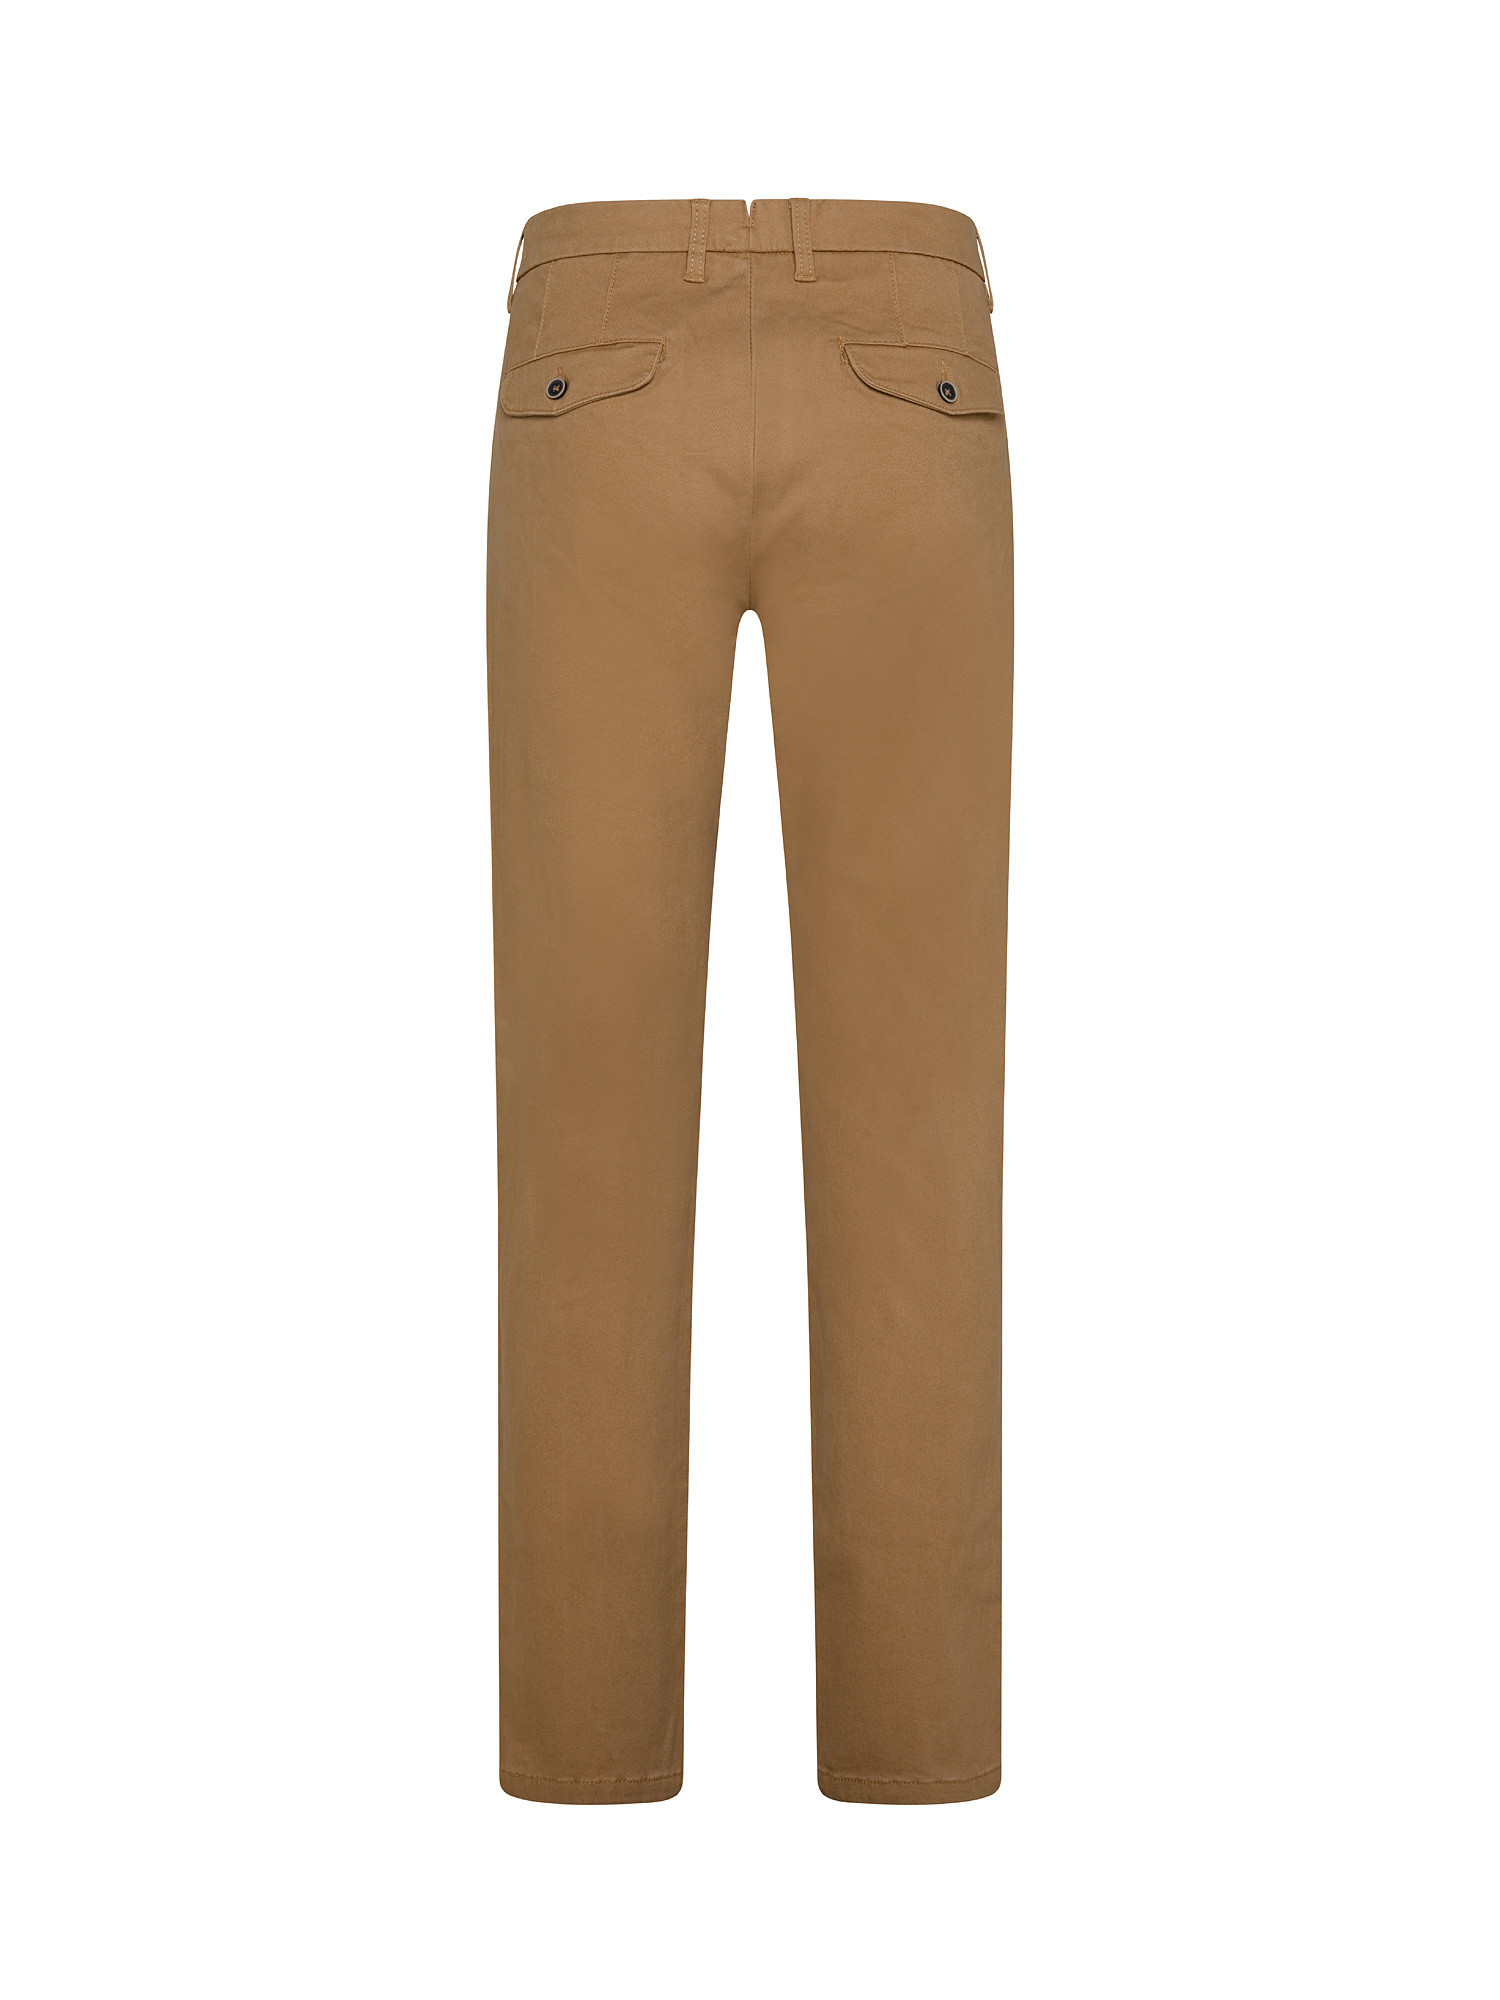 Pantalone chino, Marrone chiaro, large image number 1